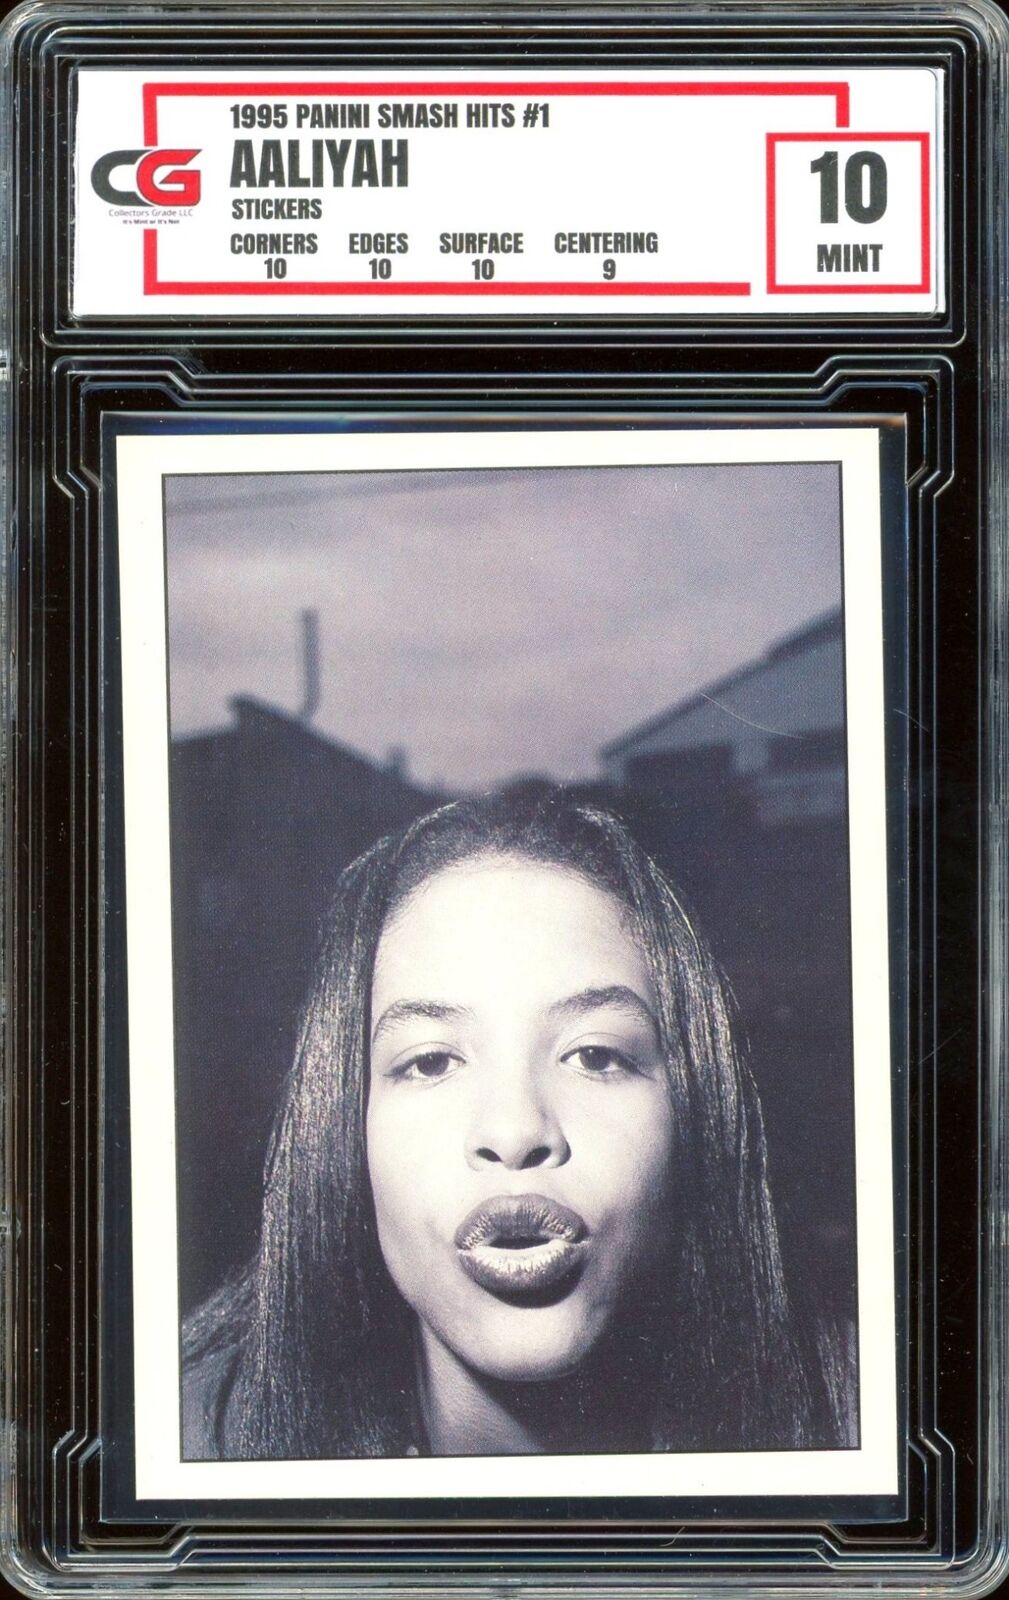 1995 Panini Smash Hits Stickers #1 ~ Aaliyah ~ GRADED CG 10